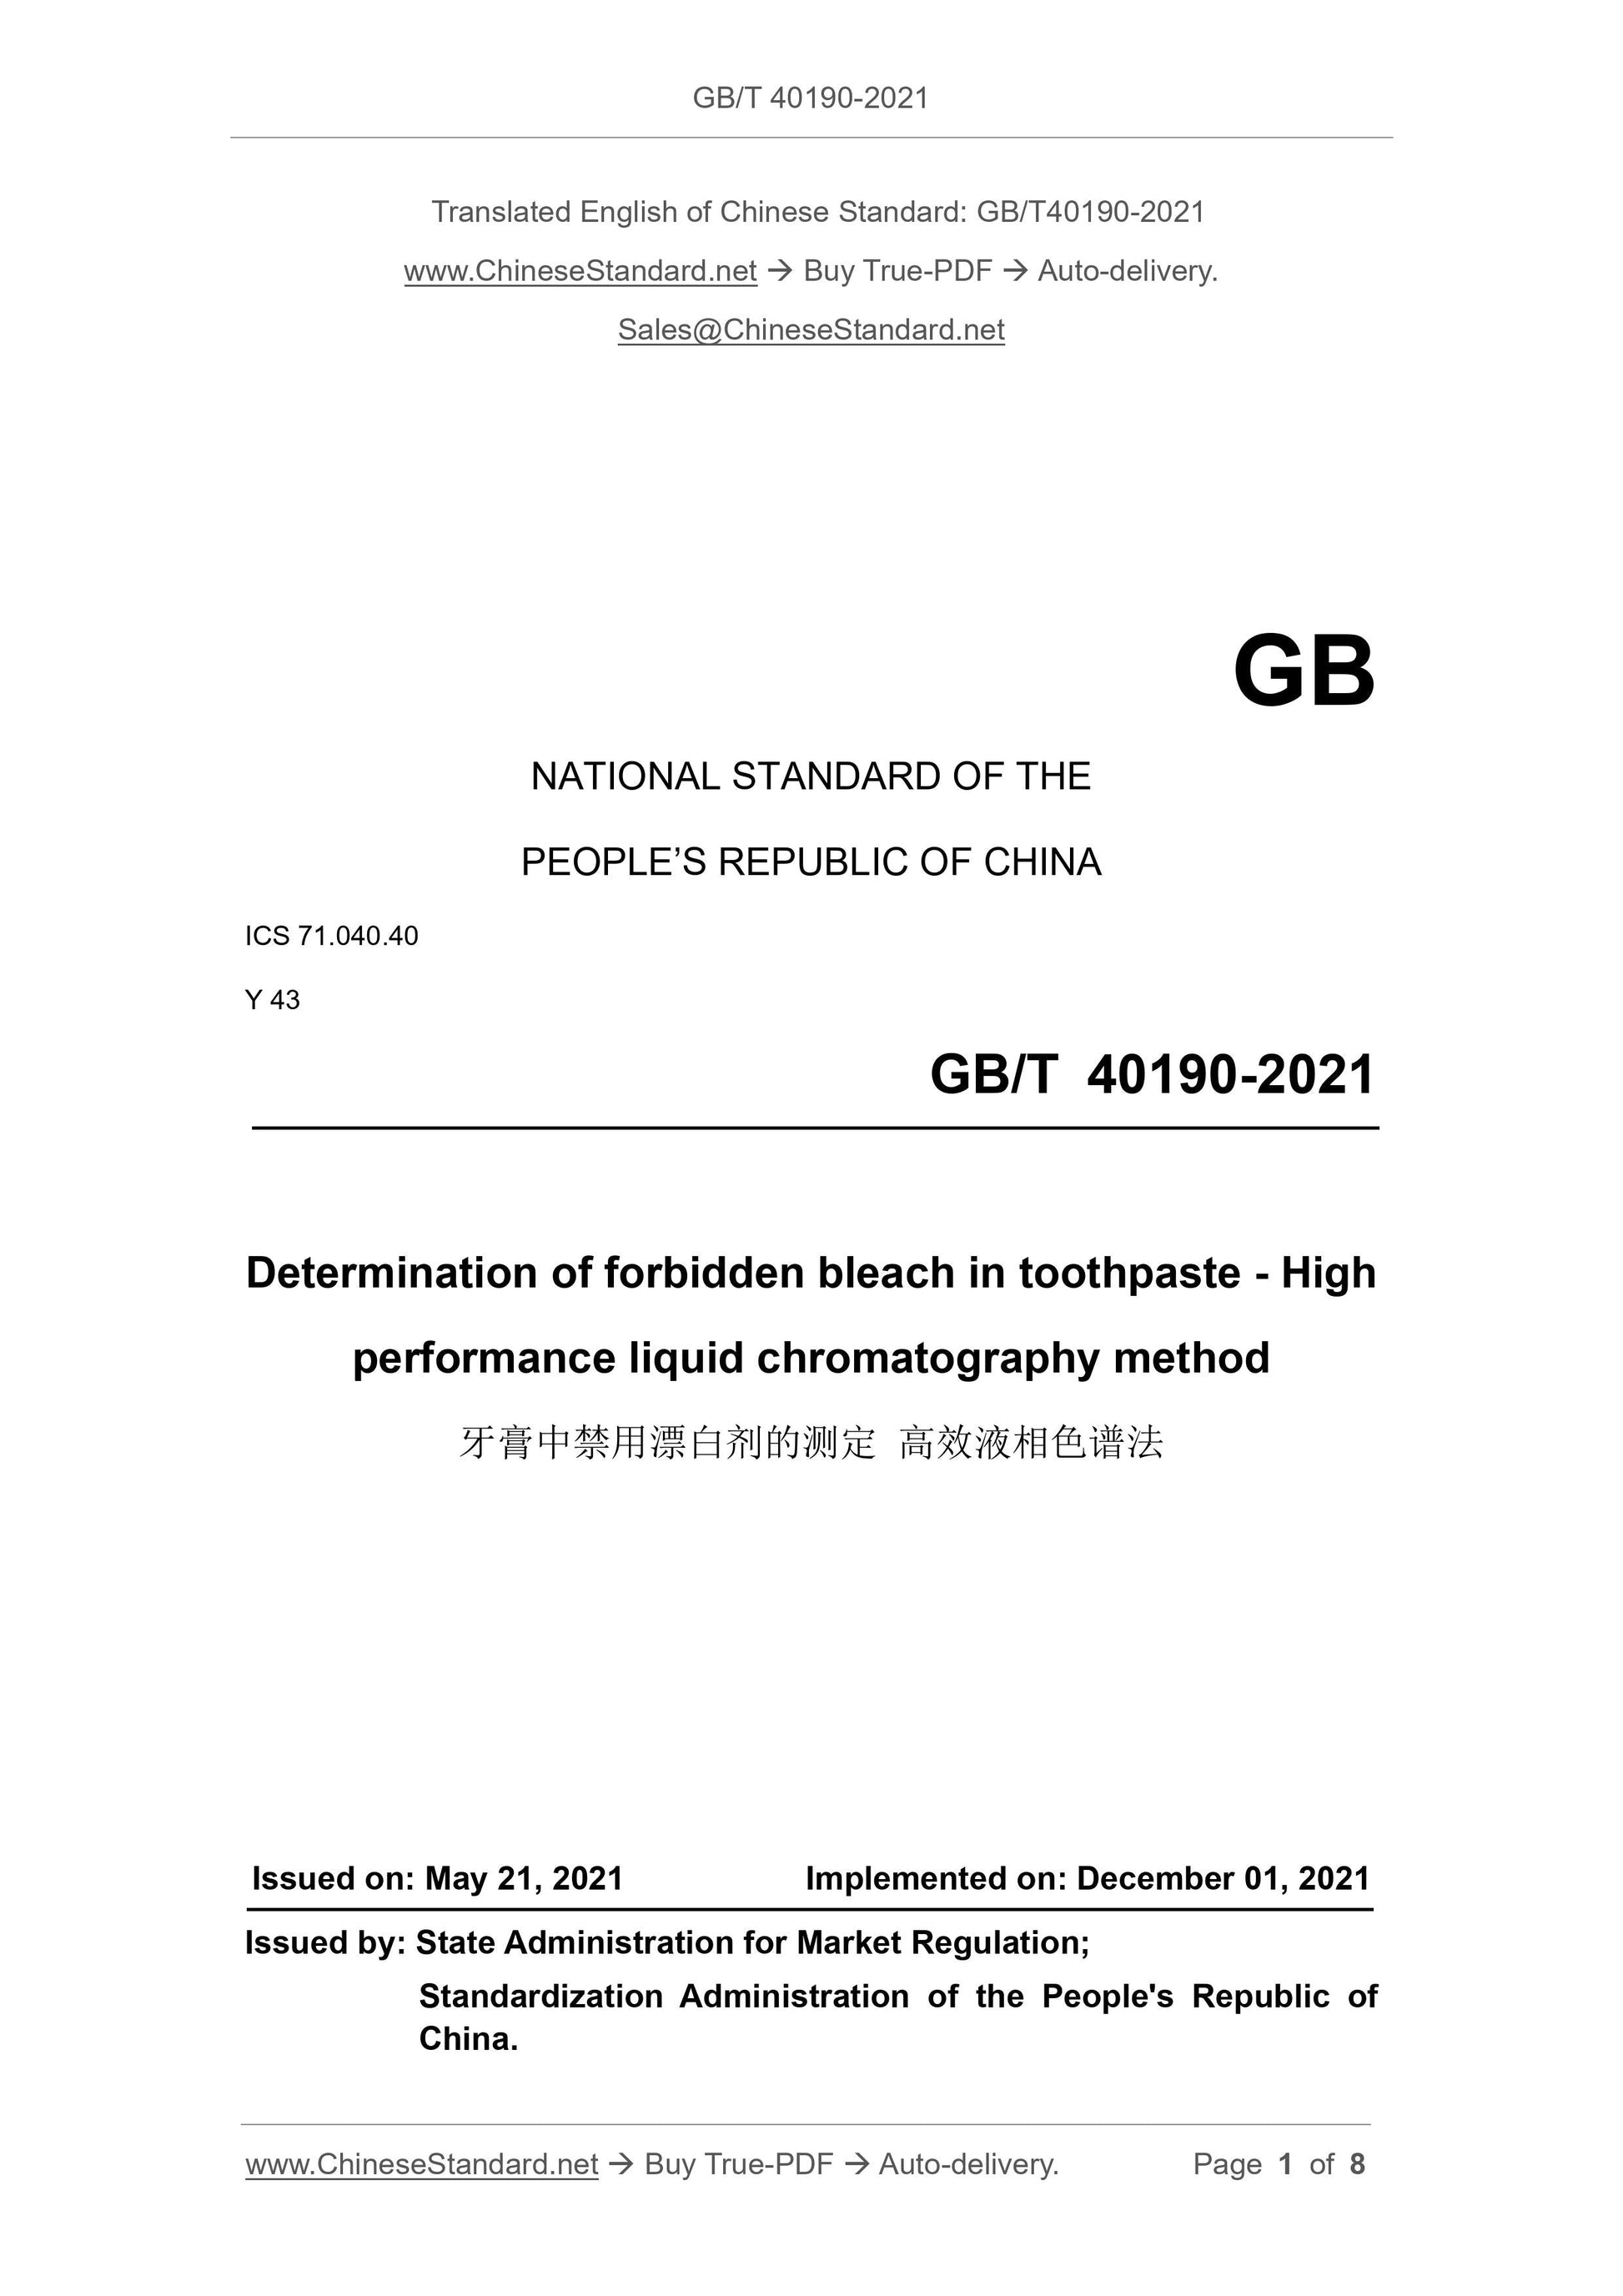 GBT40190-2021 Page 1